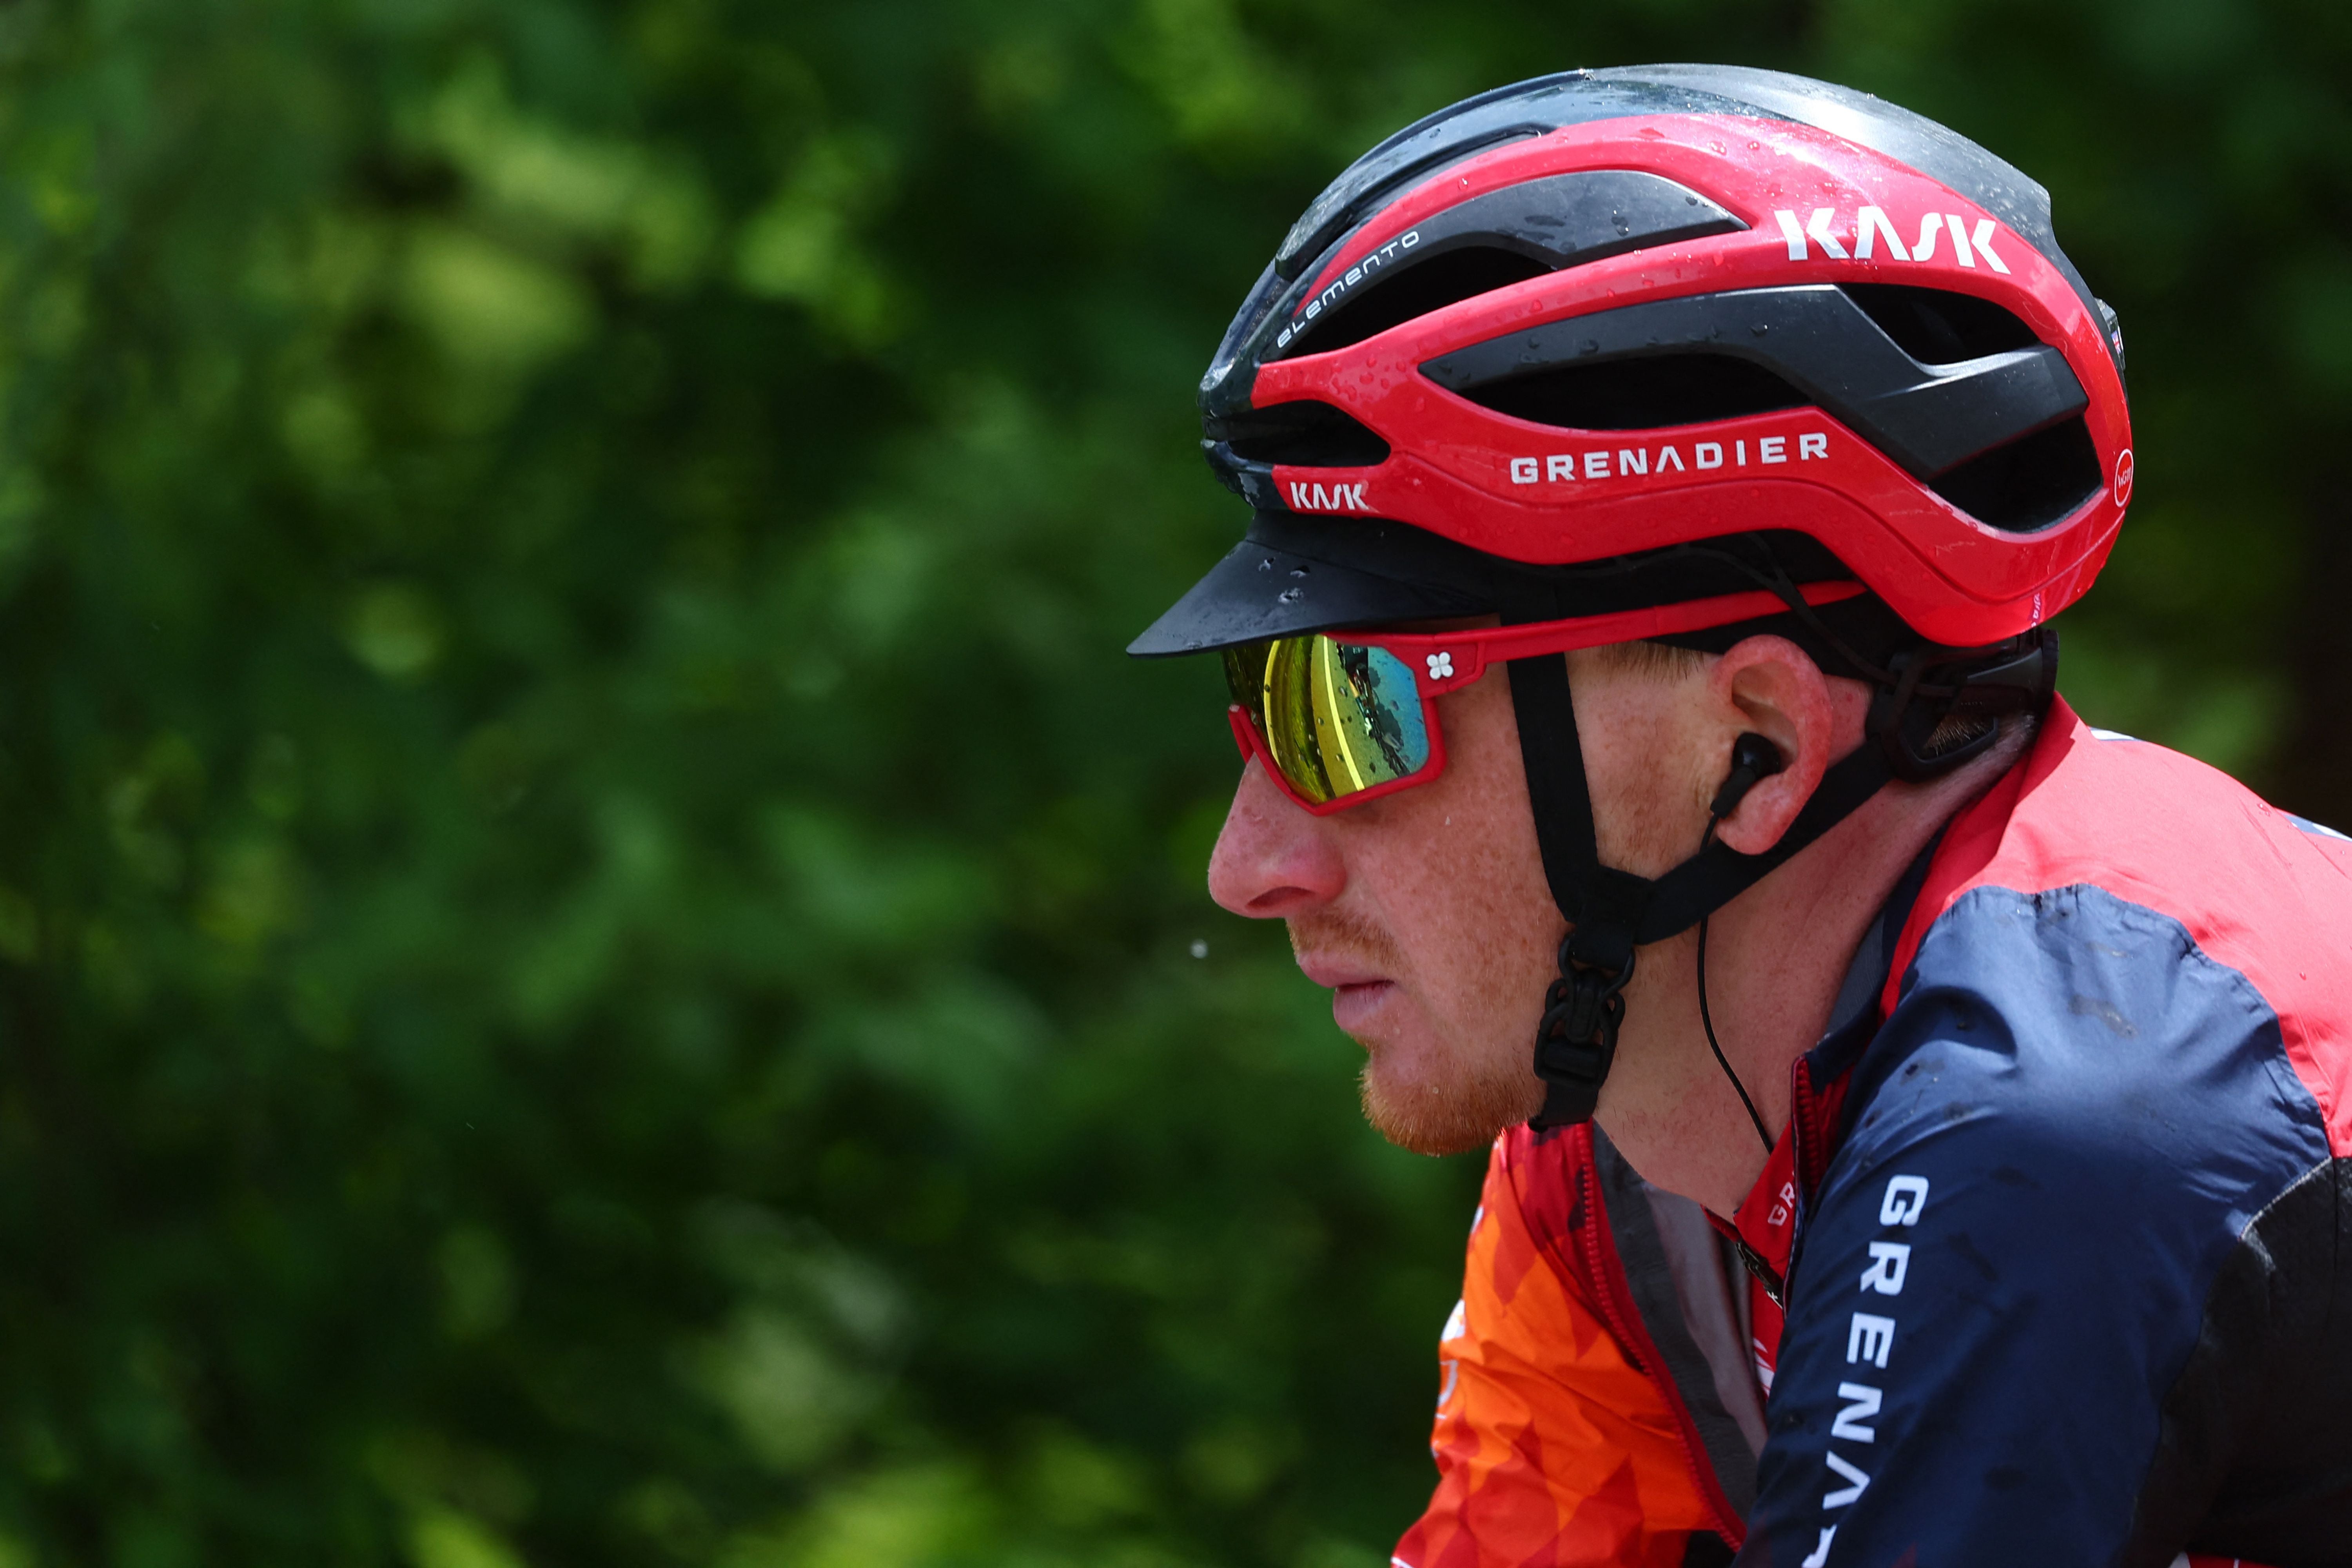 Tao Geoghegan Hart has been forced to abandon the Giro d’Italia